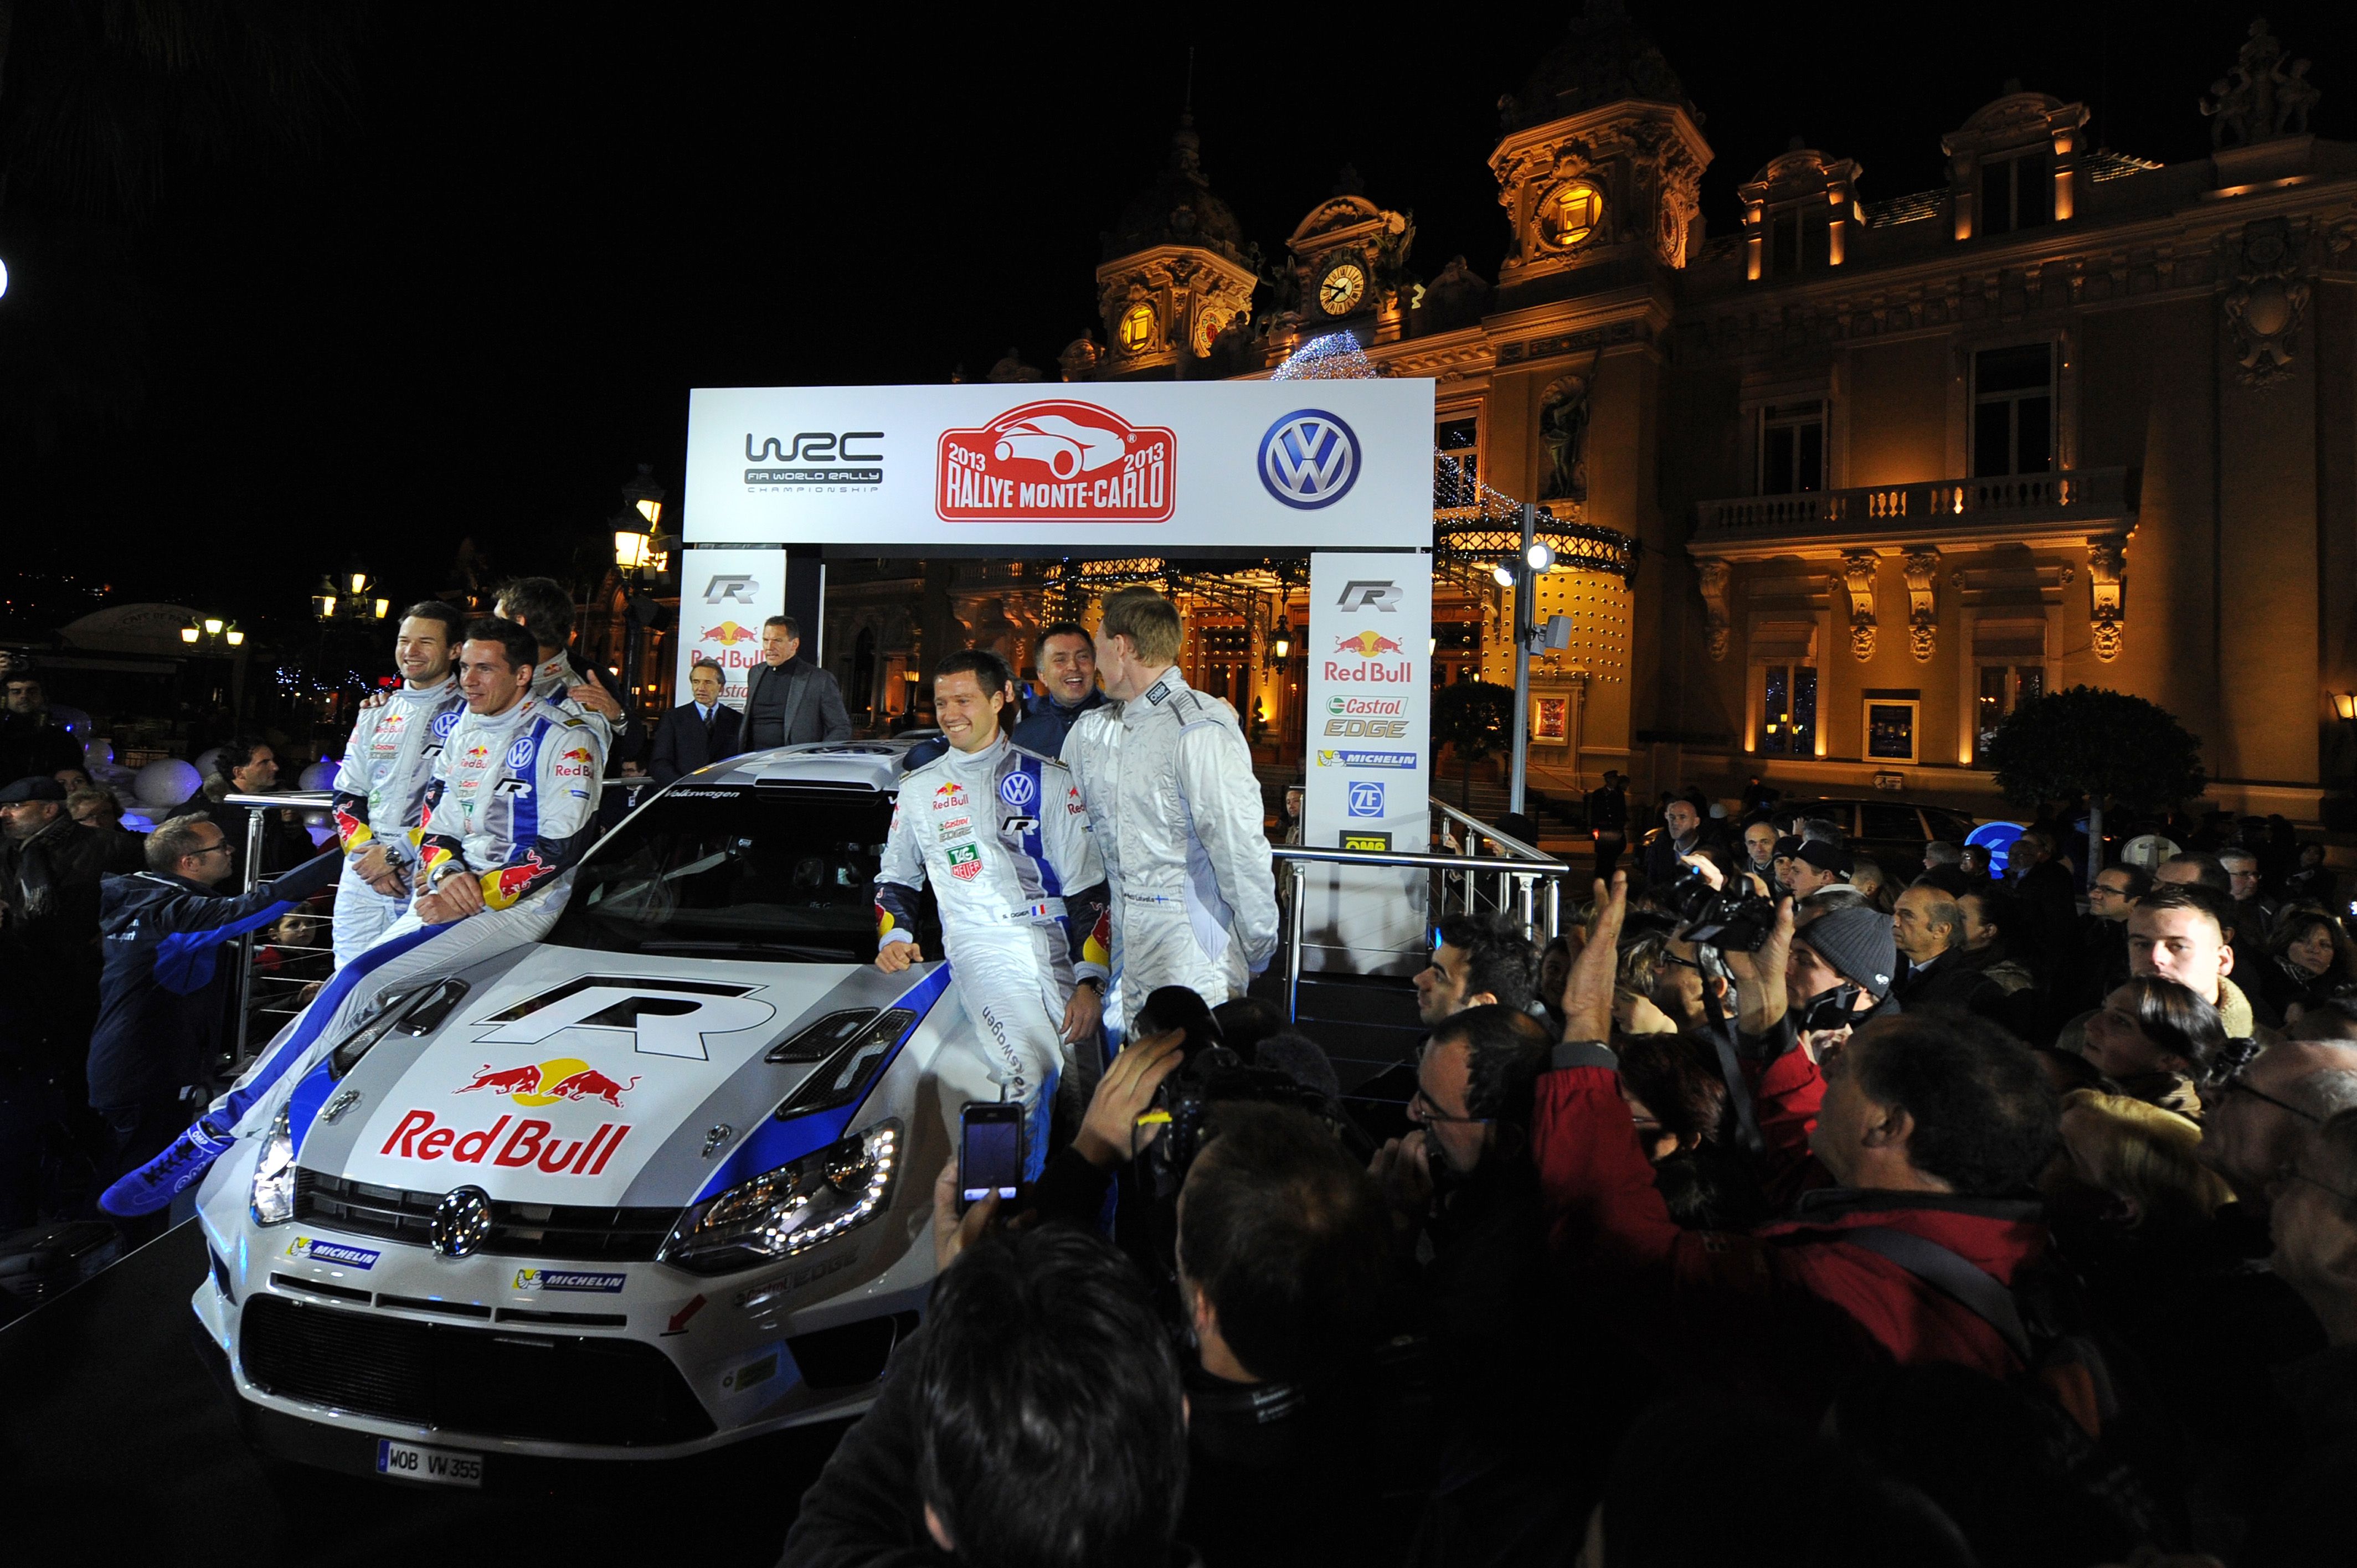 2013 Volkswagen Polo R WRC Rally Car